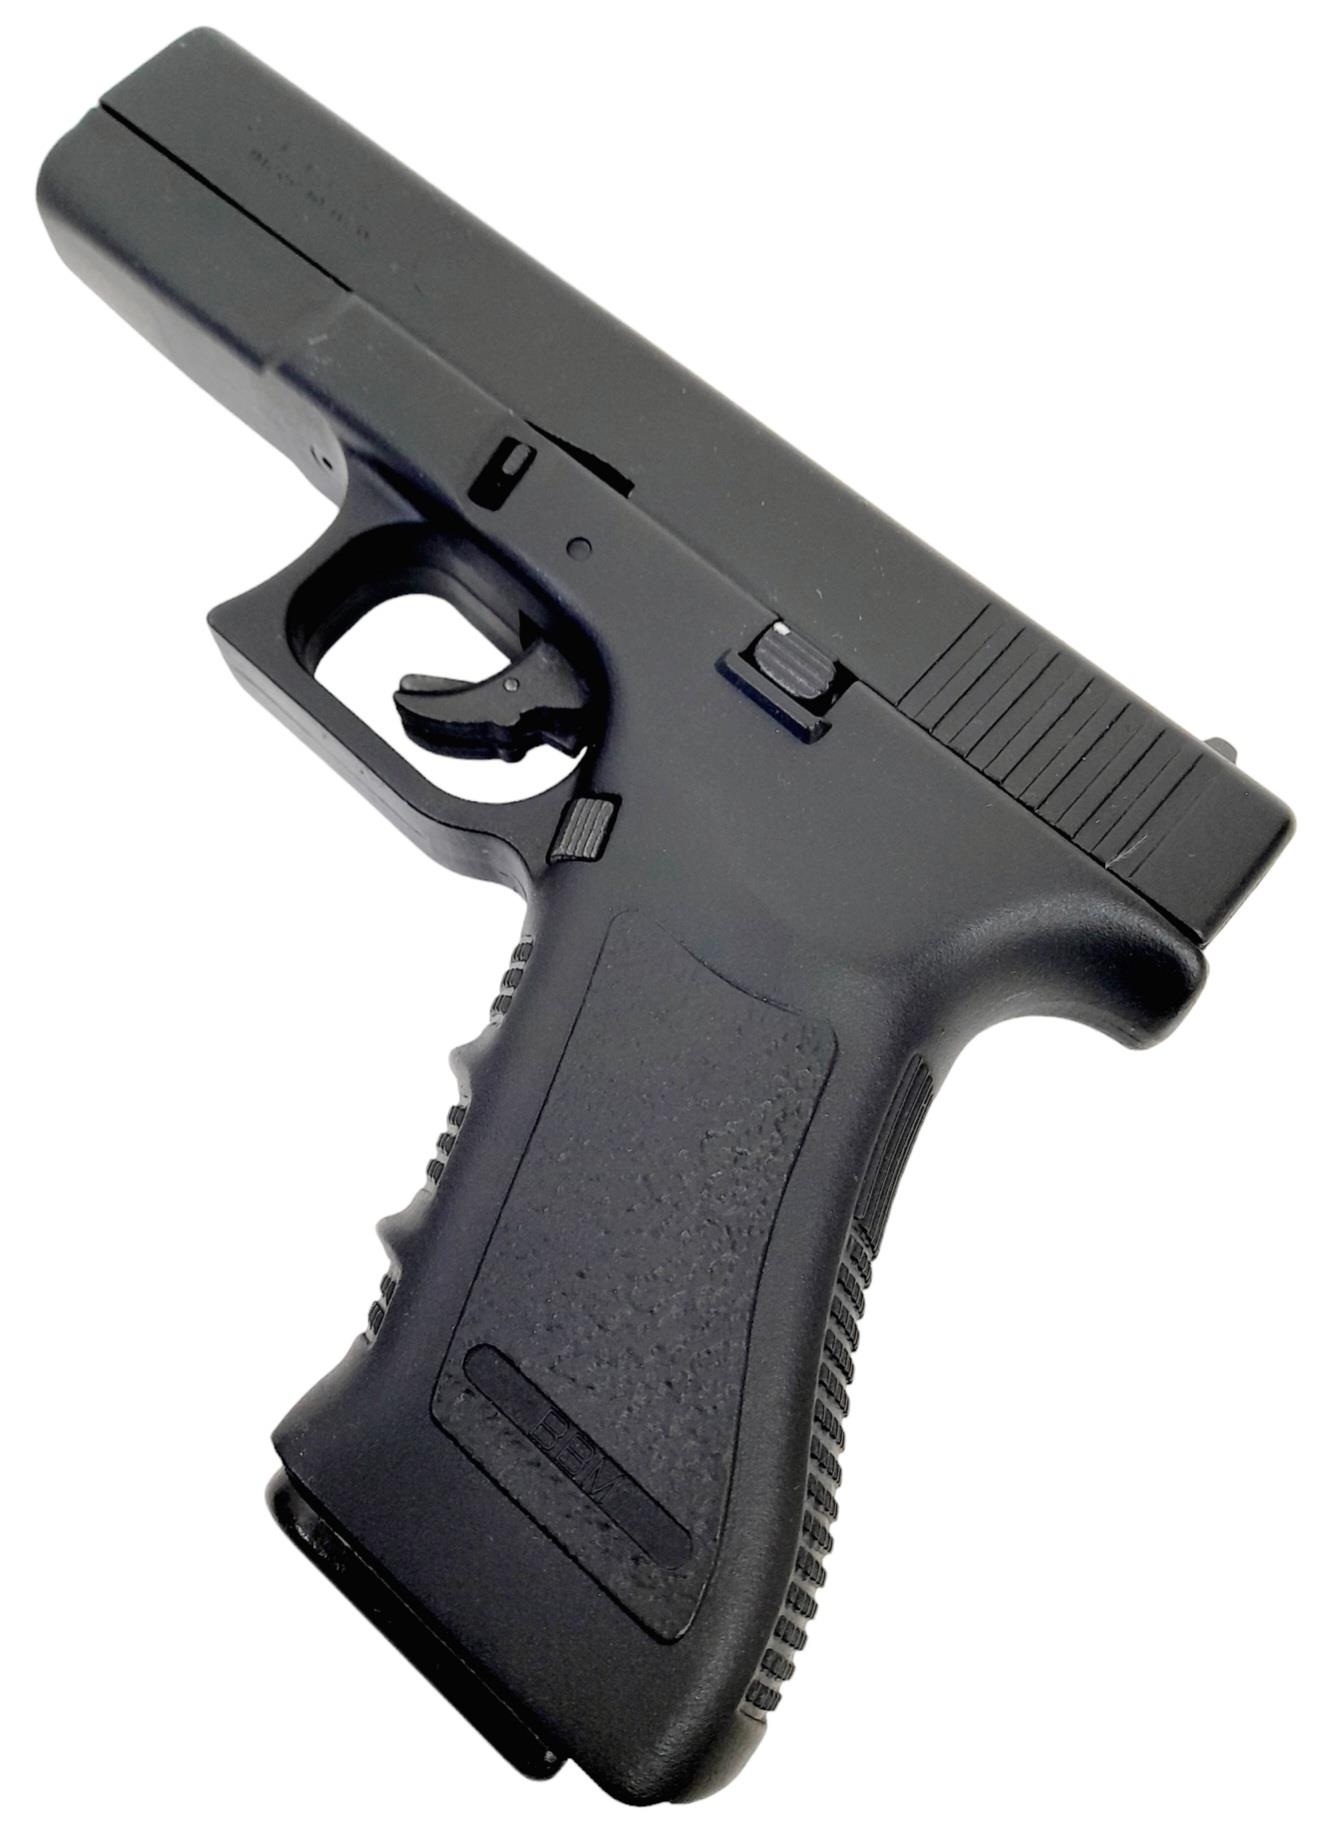 A Glock Gap 8mm Top Vented Blank Firing Pistol. Over 18 only. UK sales only. Blank guns should - Bild 3 aus 5